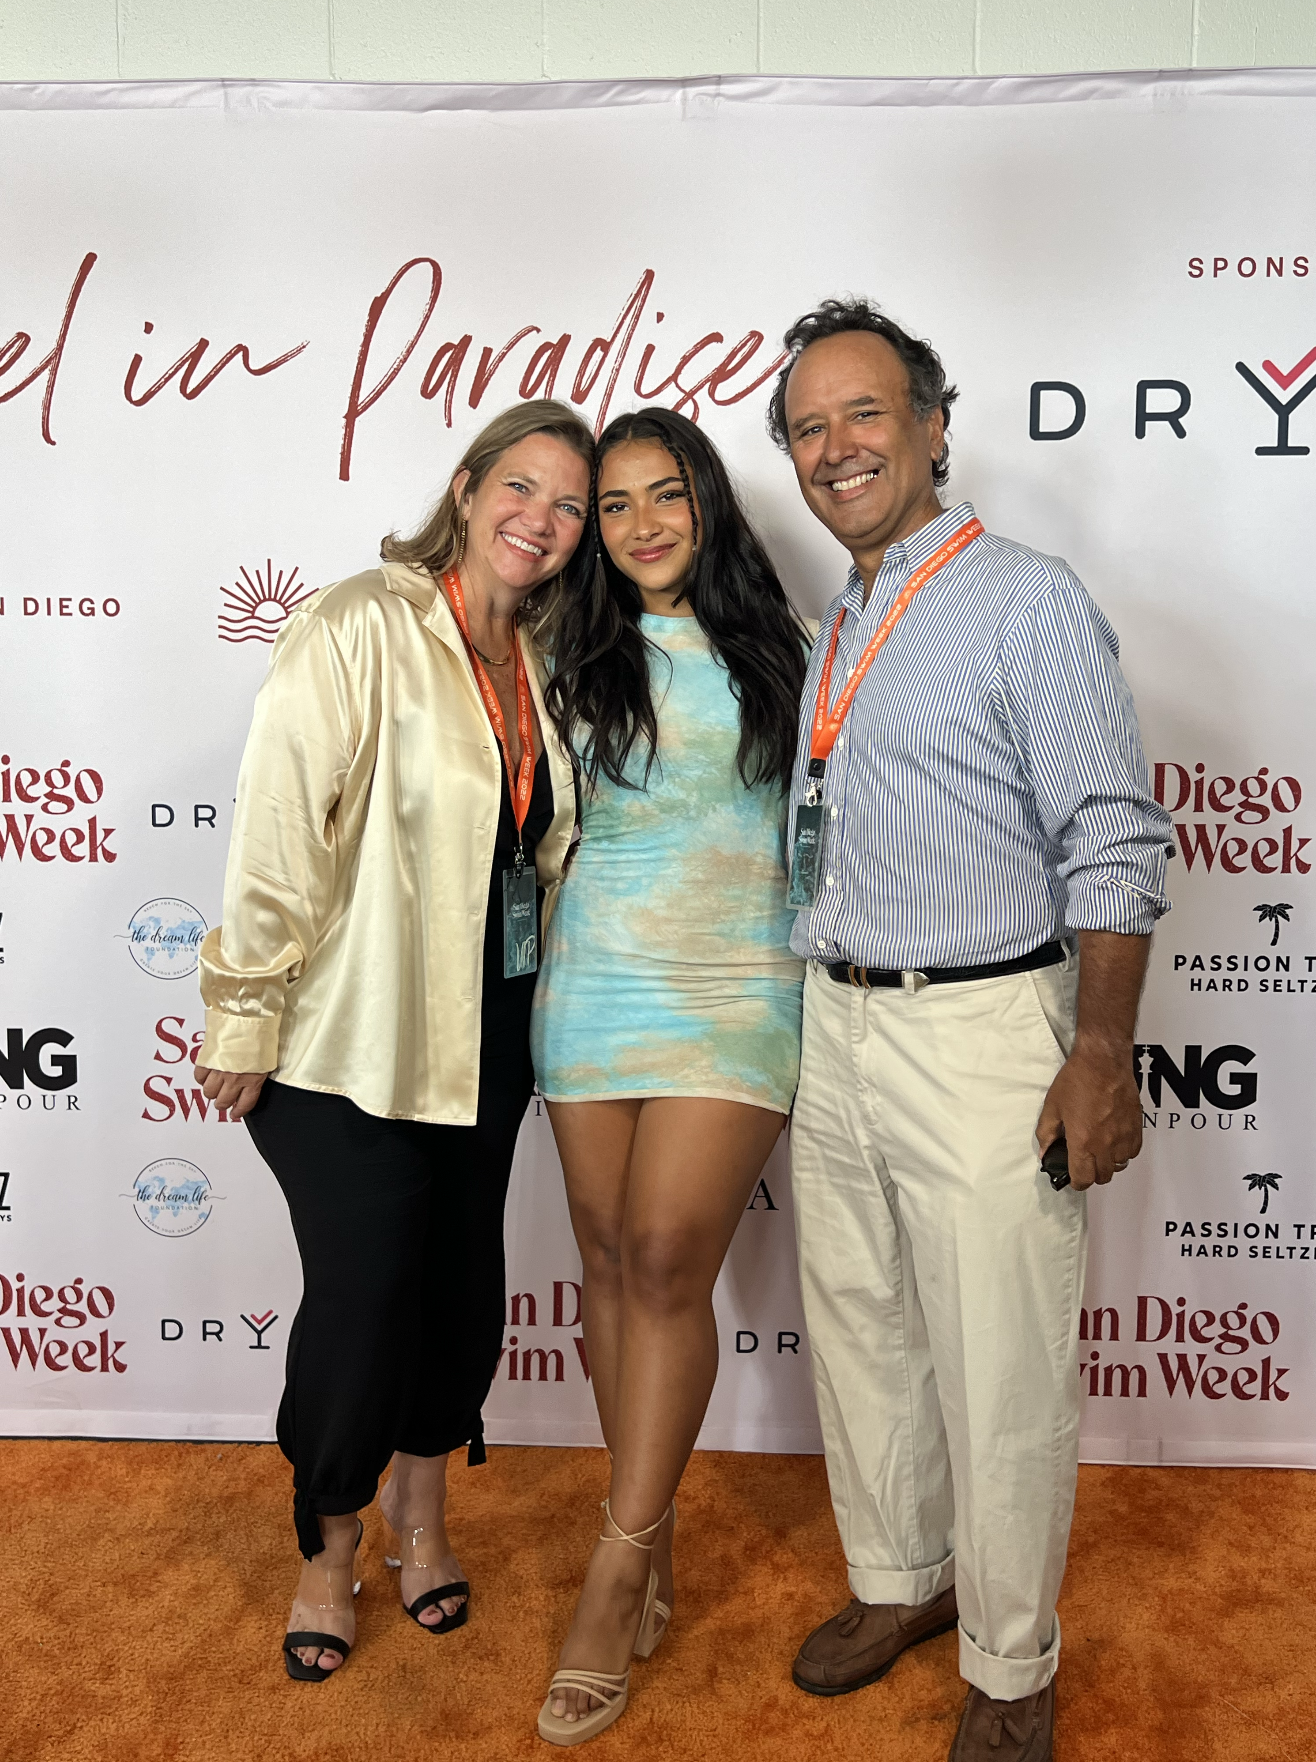 Sienna Mae Gomez poses with her parents at San Diego Swim Week fashion show